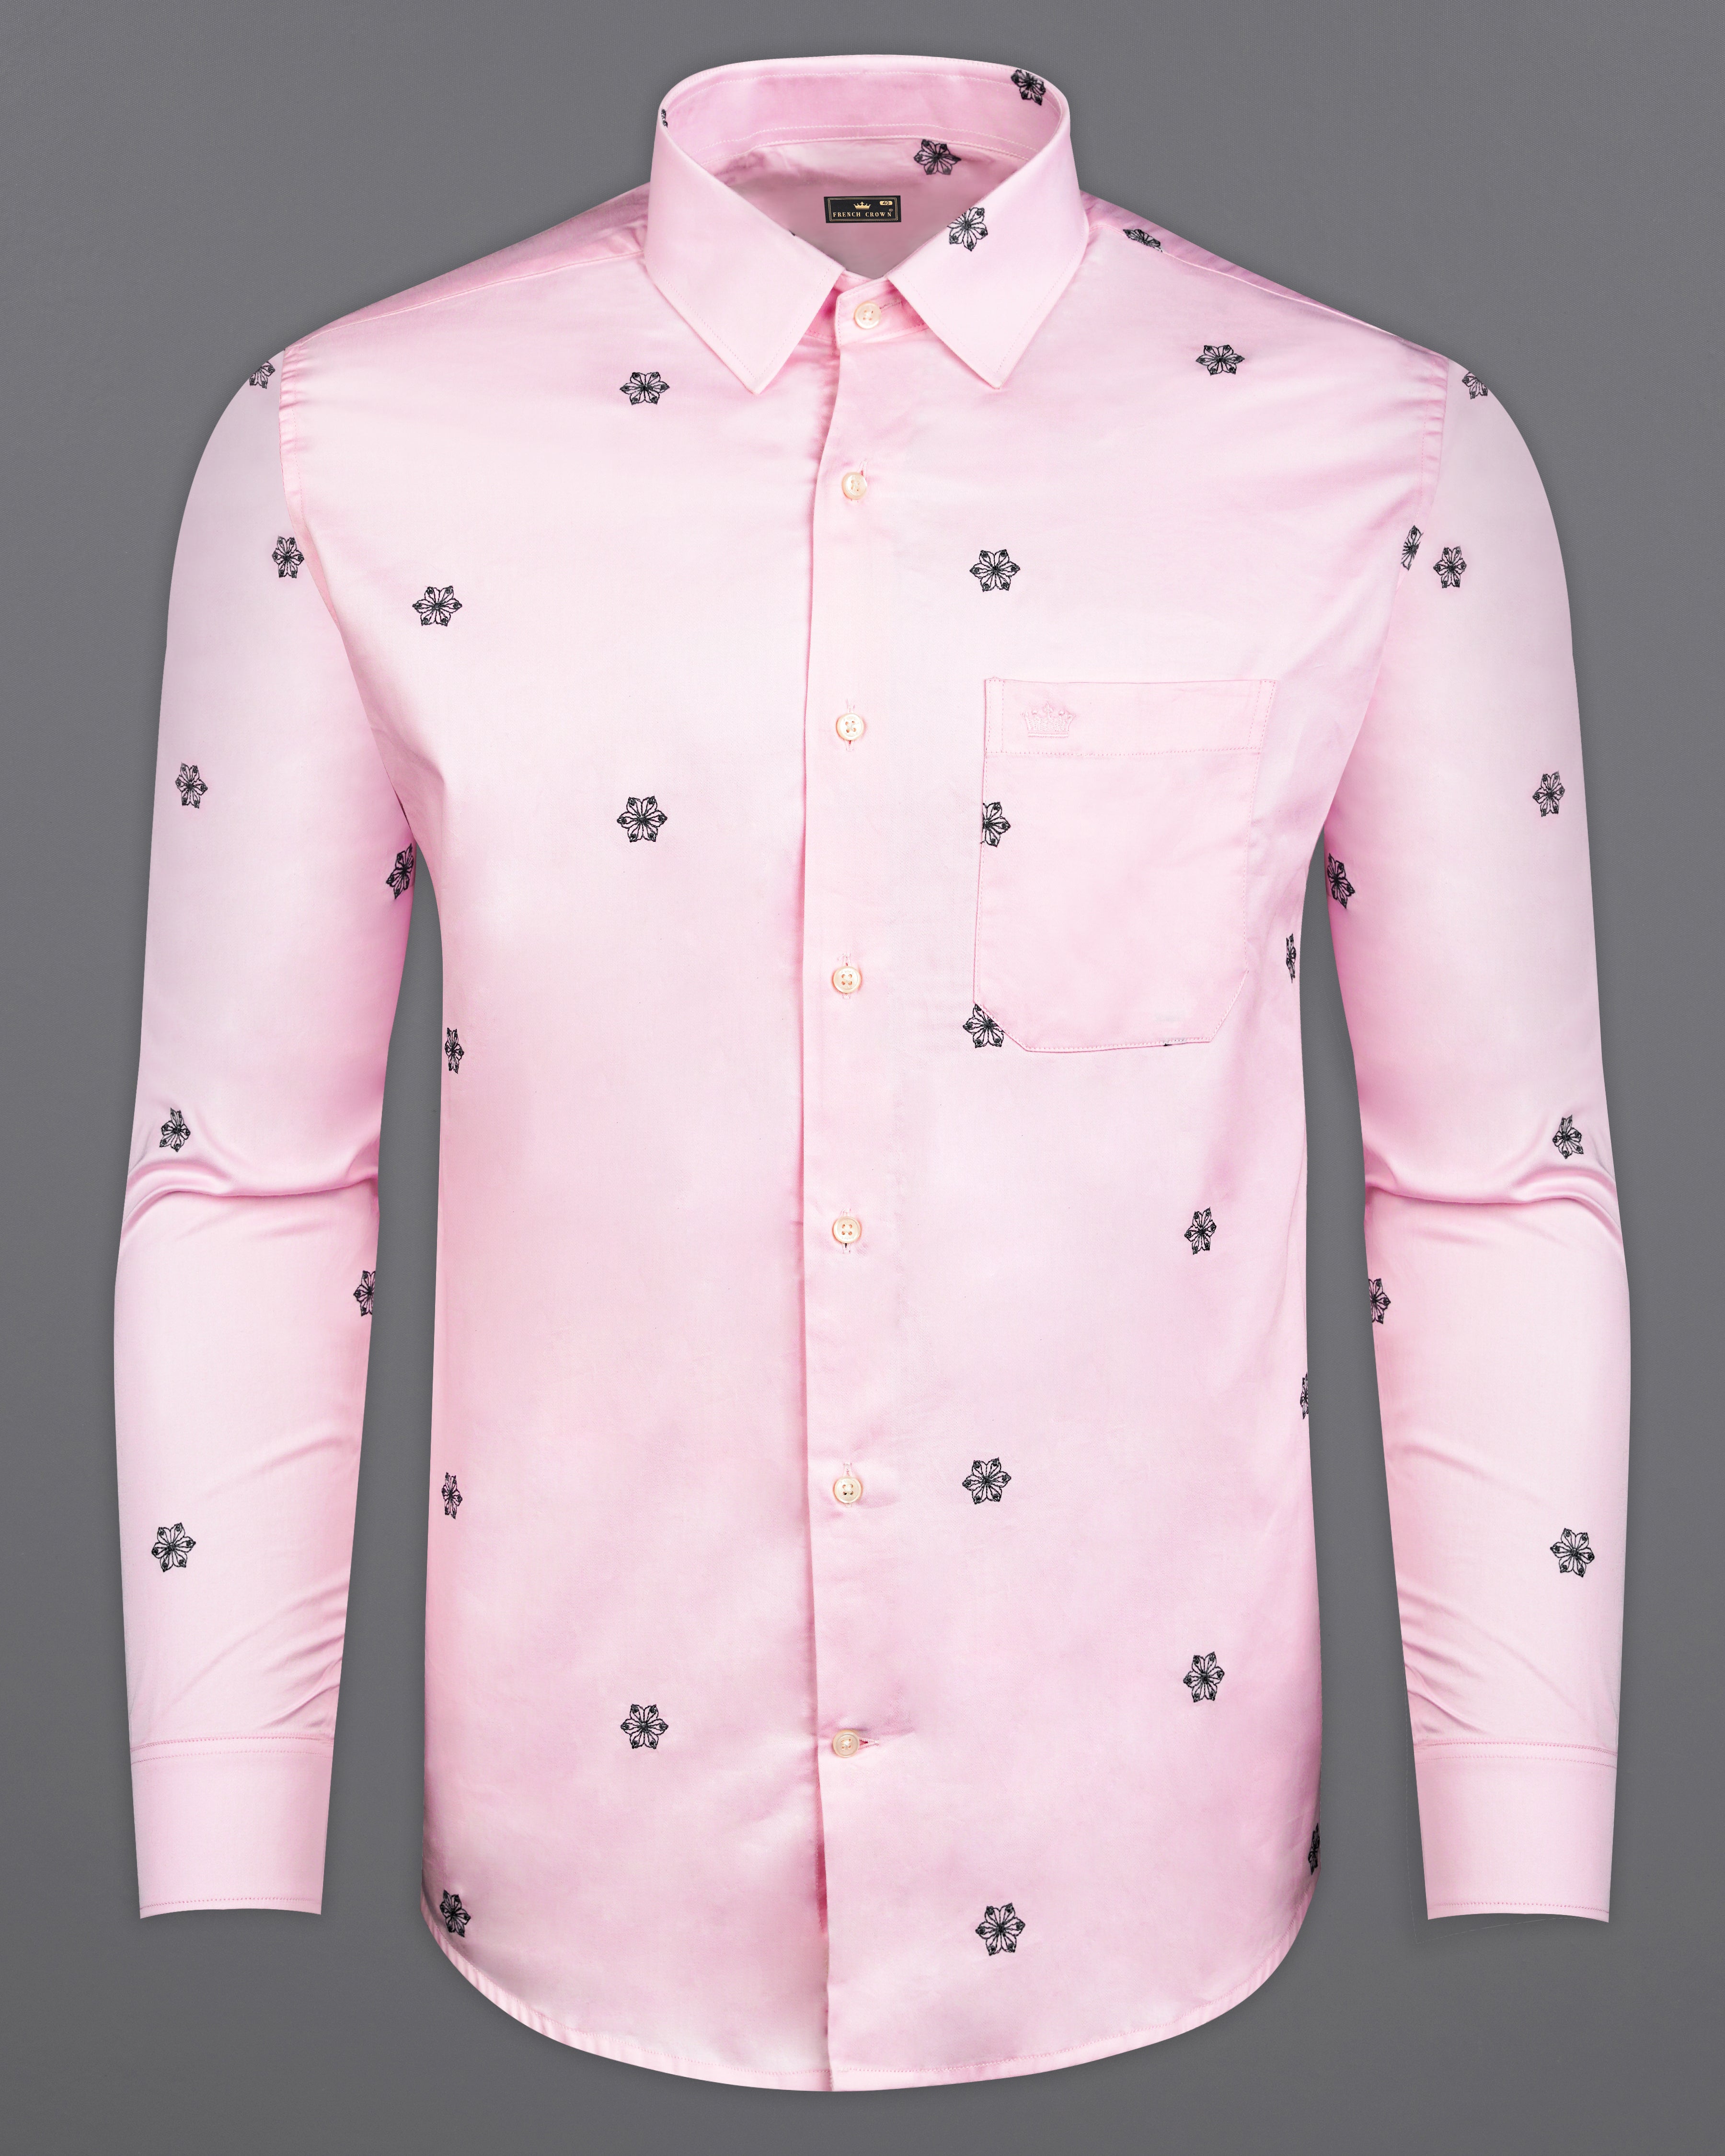 Azalea Pink with Black Textured Super Soft Premium Cotton Shirt 9860-38, 9860-H-38, 9860-39, 9860-H-39, 9860-40, 9860-H-40, 9860-42, 9860-H-42, 9860-44, 9860-H-44, 9860-46, 9860-H-46, 9860-48, 9860-H-48, 9860-50, 9860-H-50, 9860-52, 9860-H-52